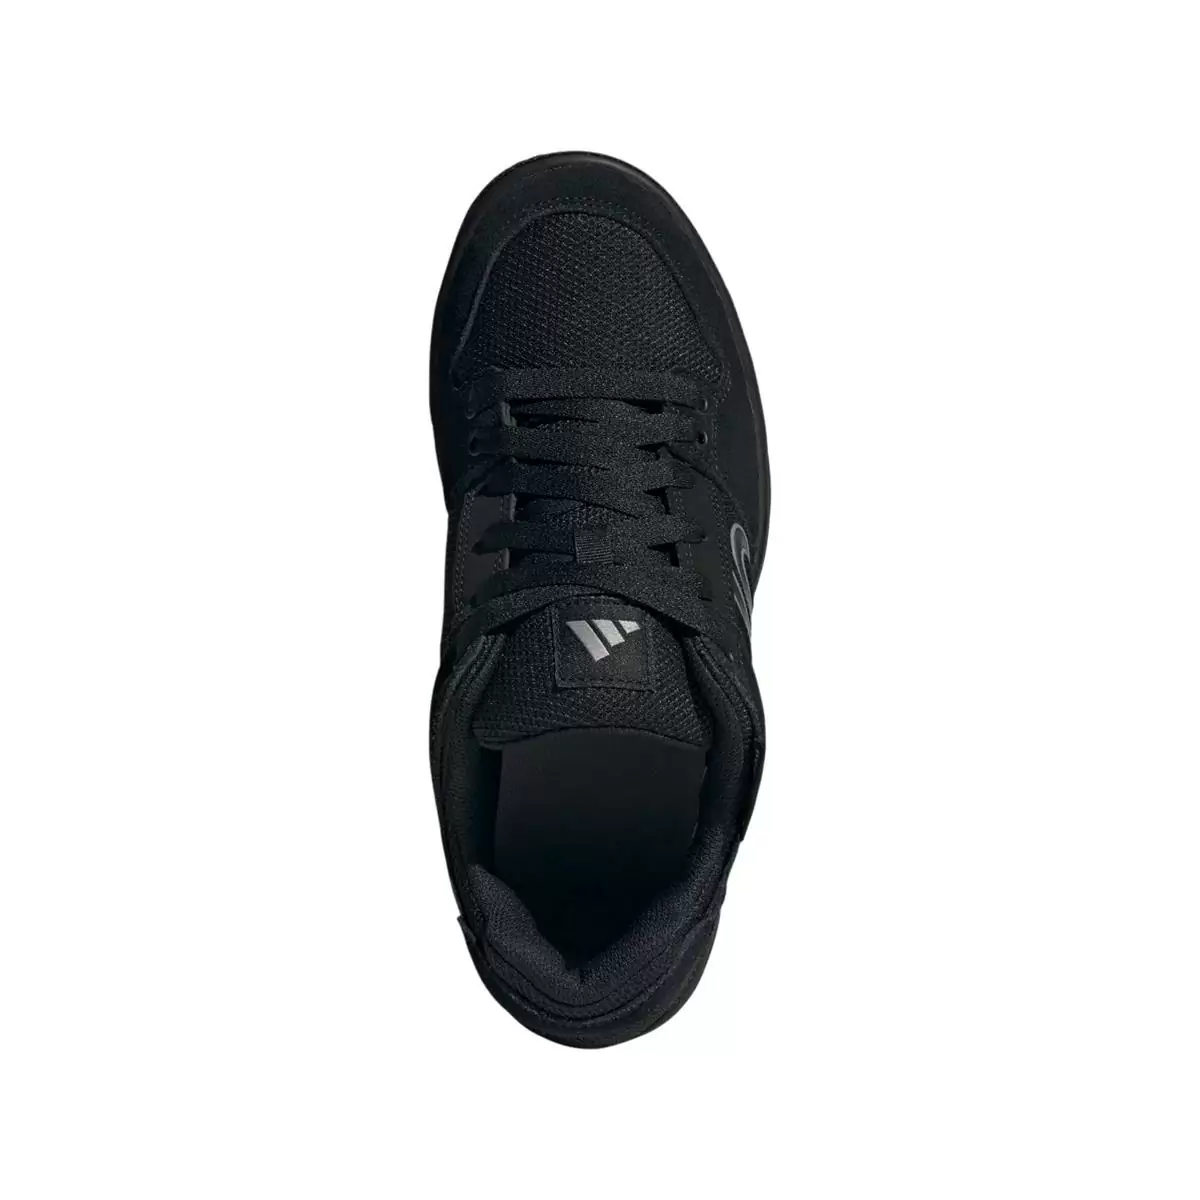 MTB Shoes Flat Freerider Black Size 41 #1